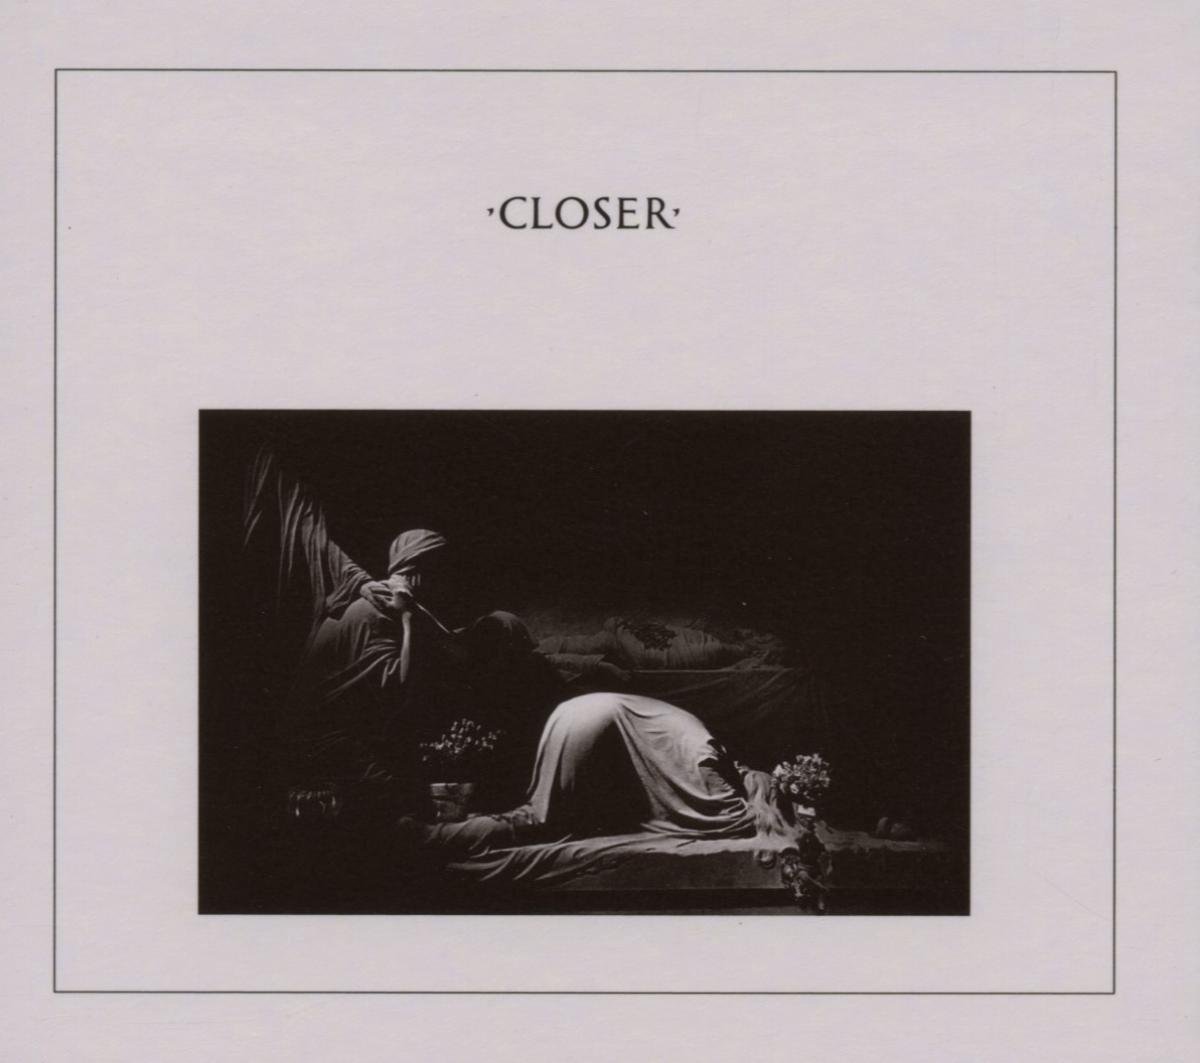 Closer + Live Cd - Joy Division